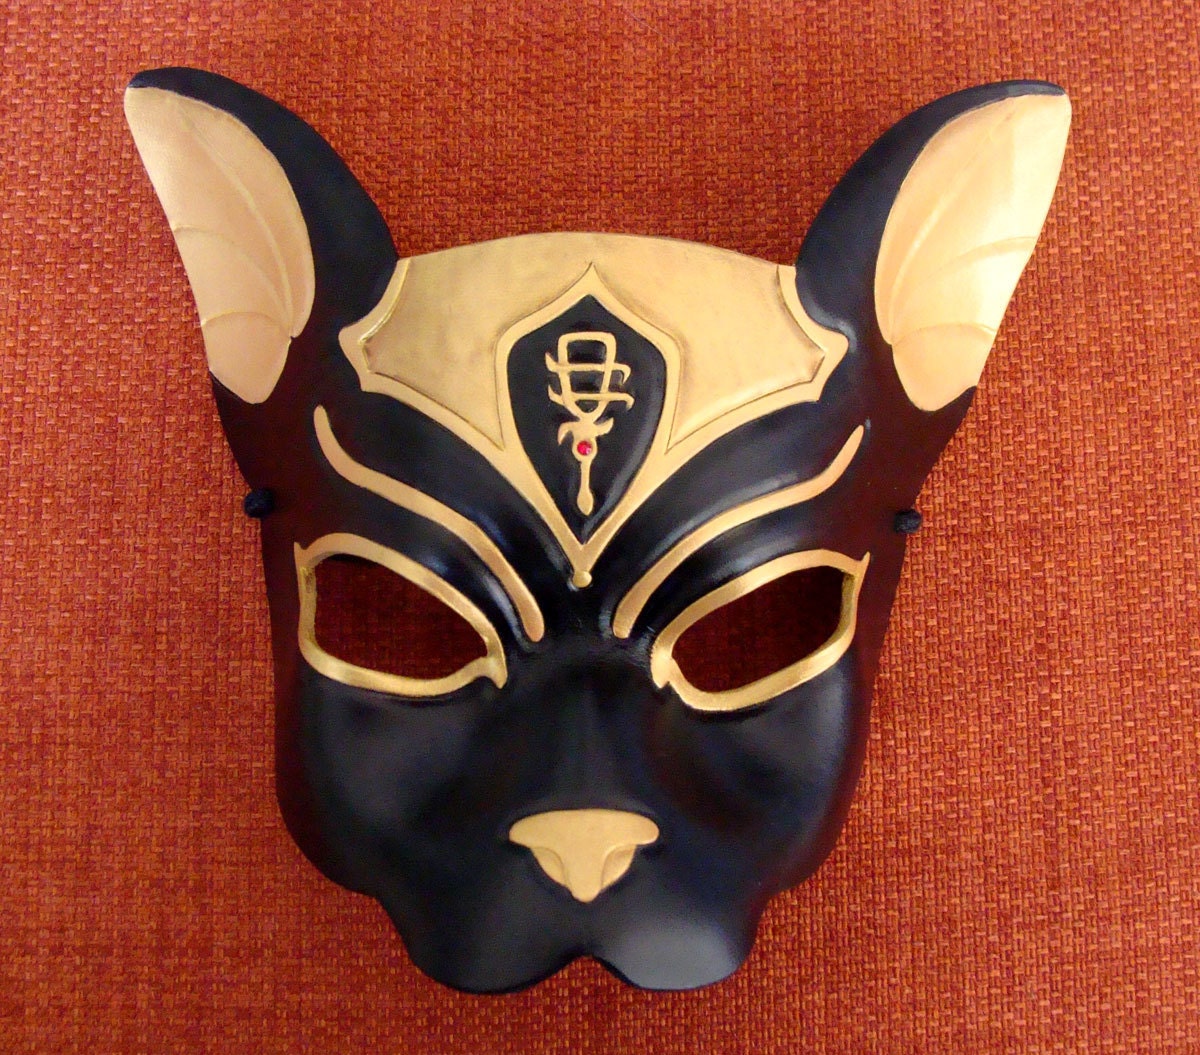 Egyptian God Masks